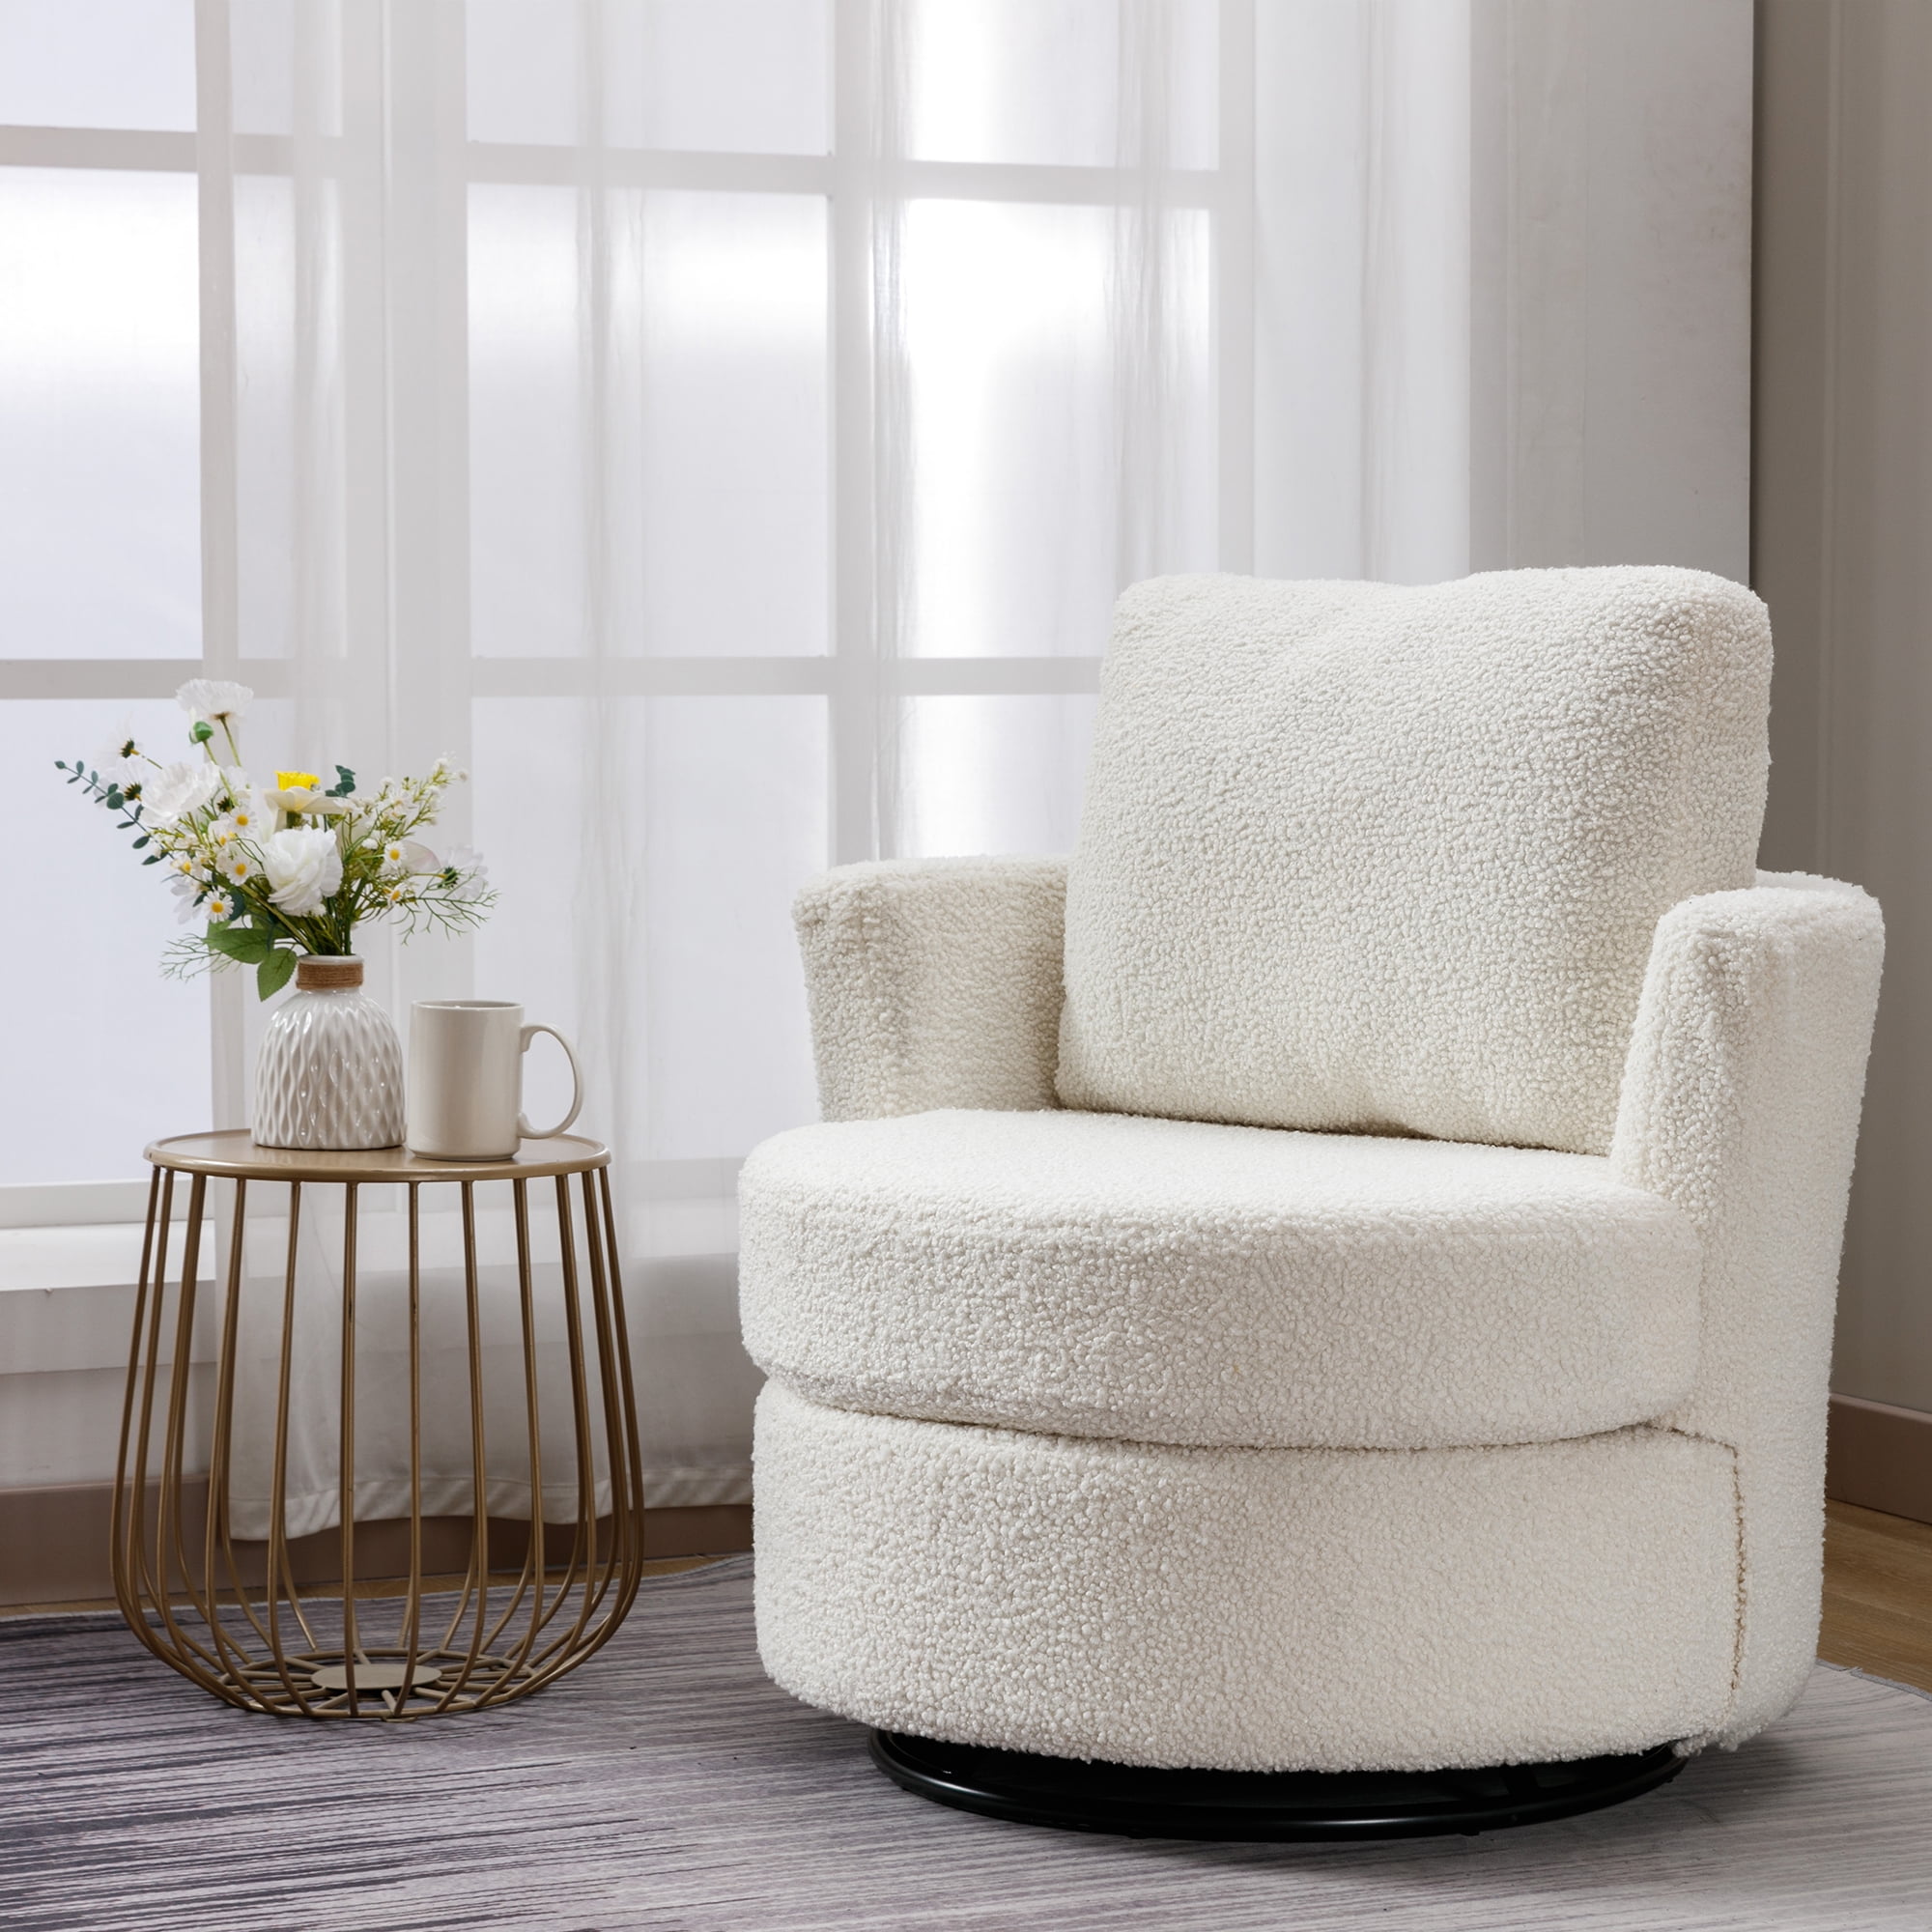 Room Chair, Accent Living for & Beige Chair Armchair Sherpa Swivel Chenille Chair Sofa Comfy Barrel Nursery, Chair Round Muumblus